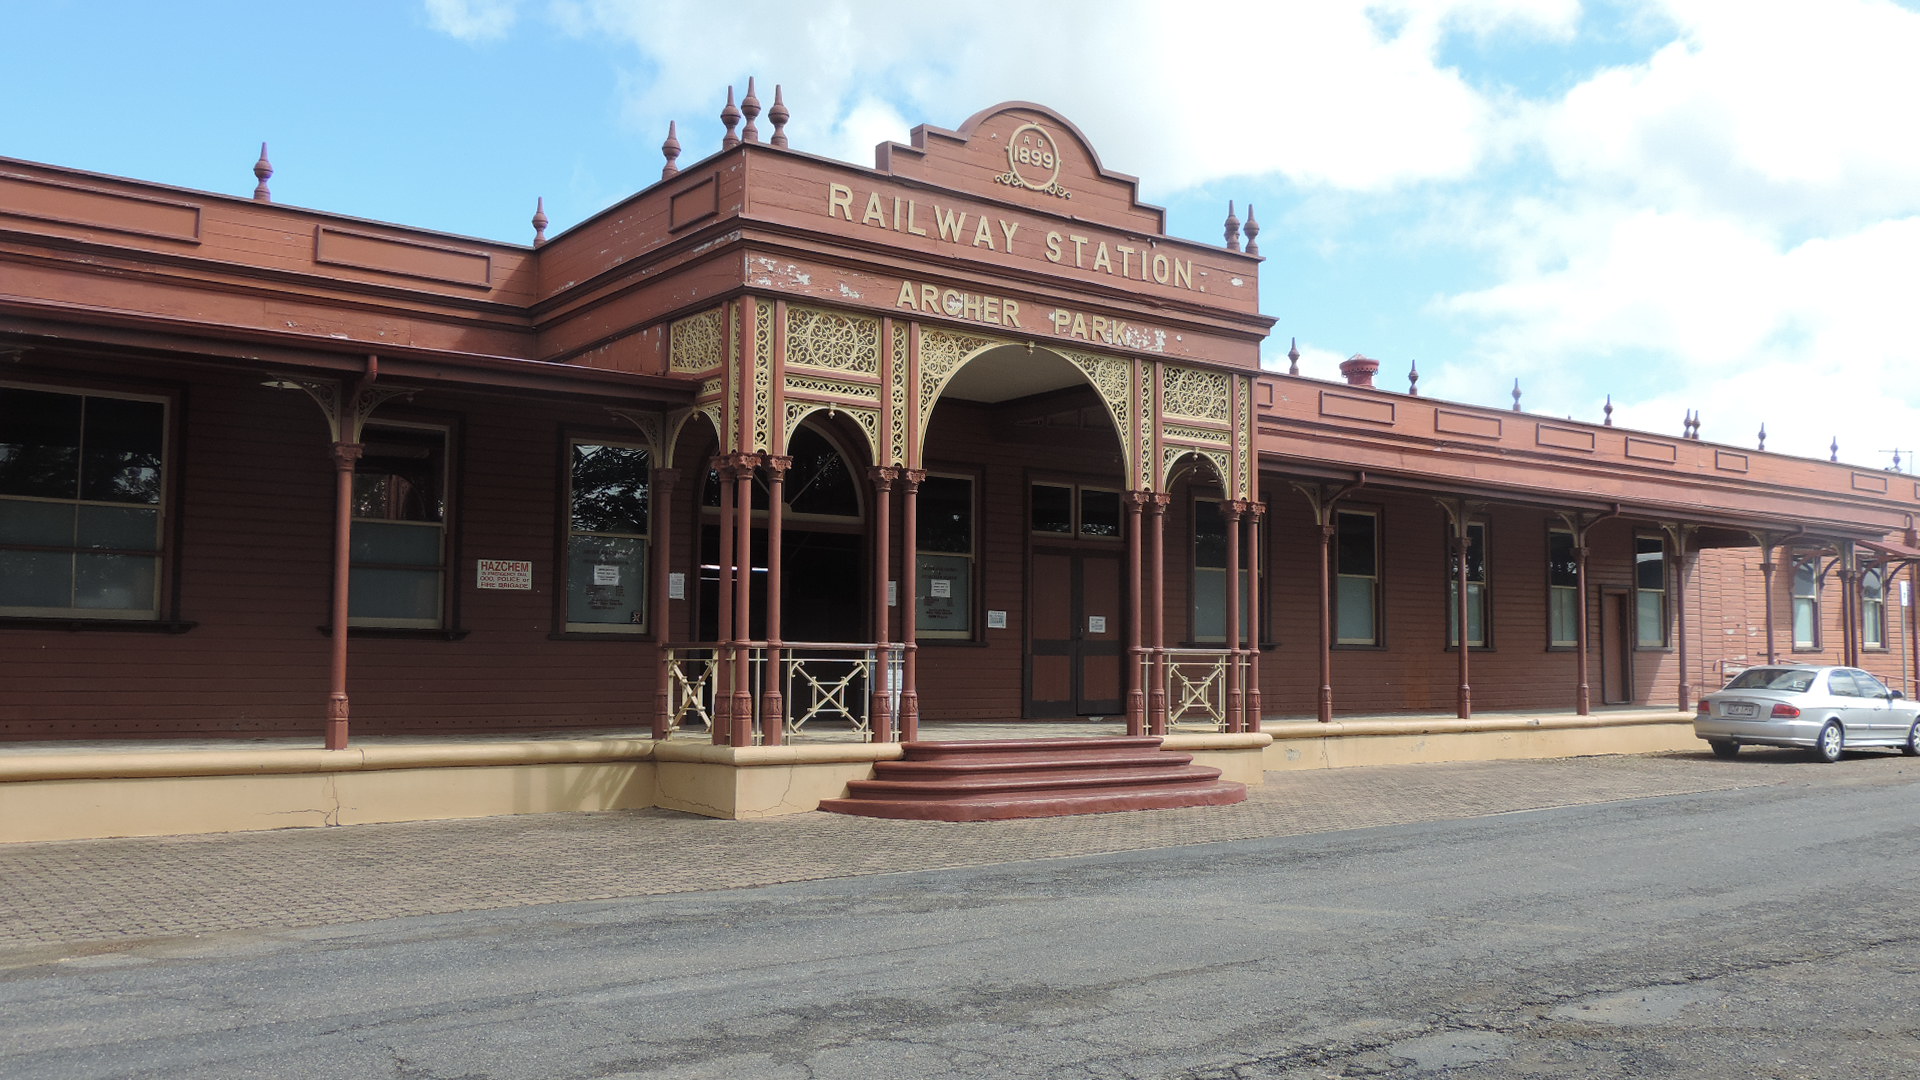 Archer Park railway station